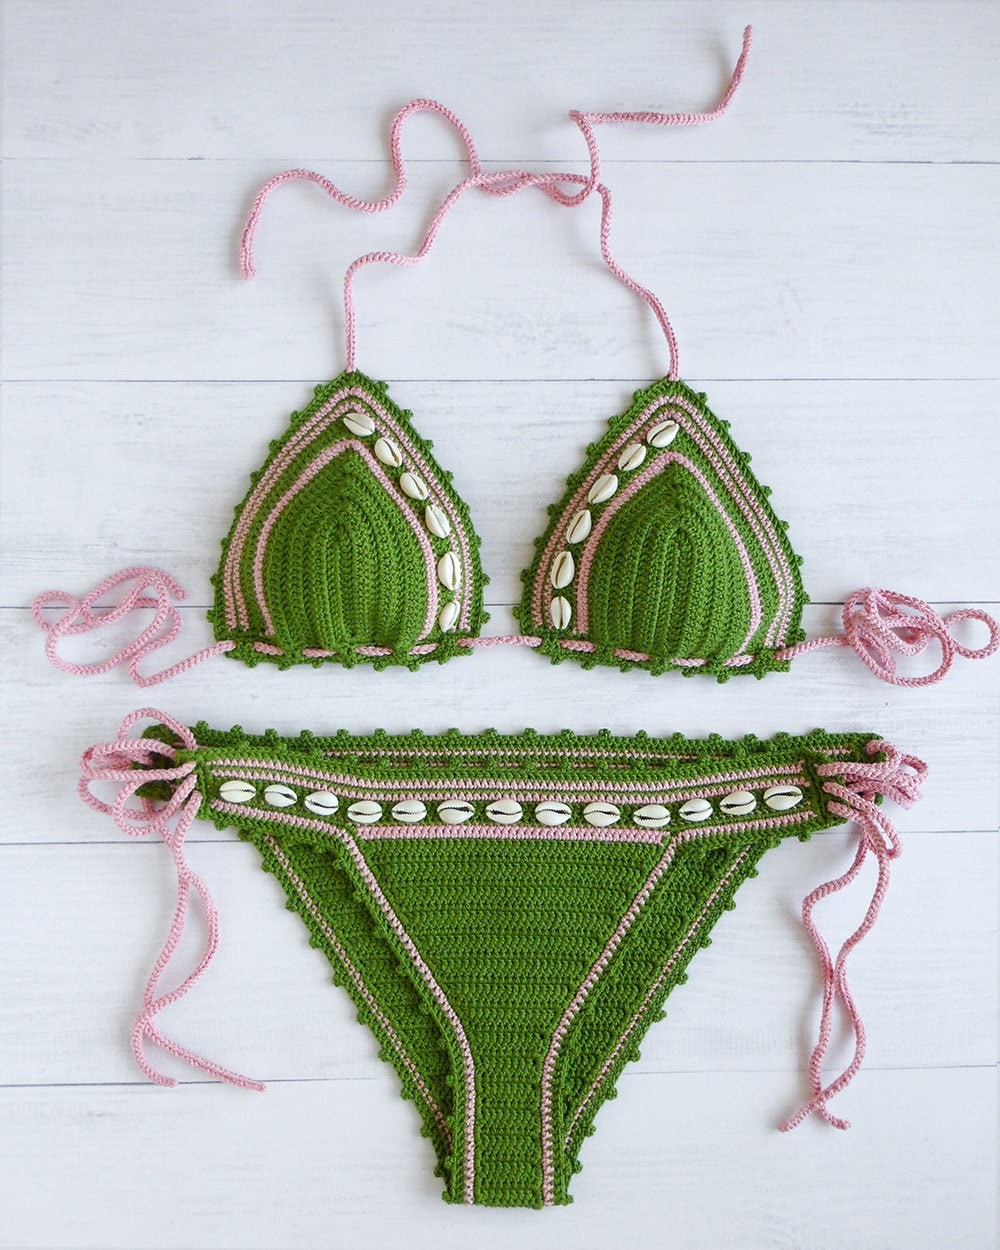 Crochet Thong Pattern, Crochet Bikini Pattern, Easy Crochet Bikini